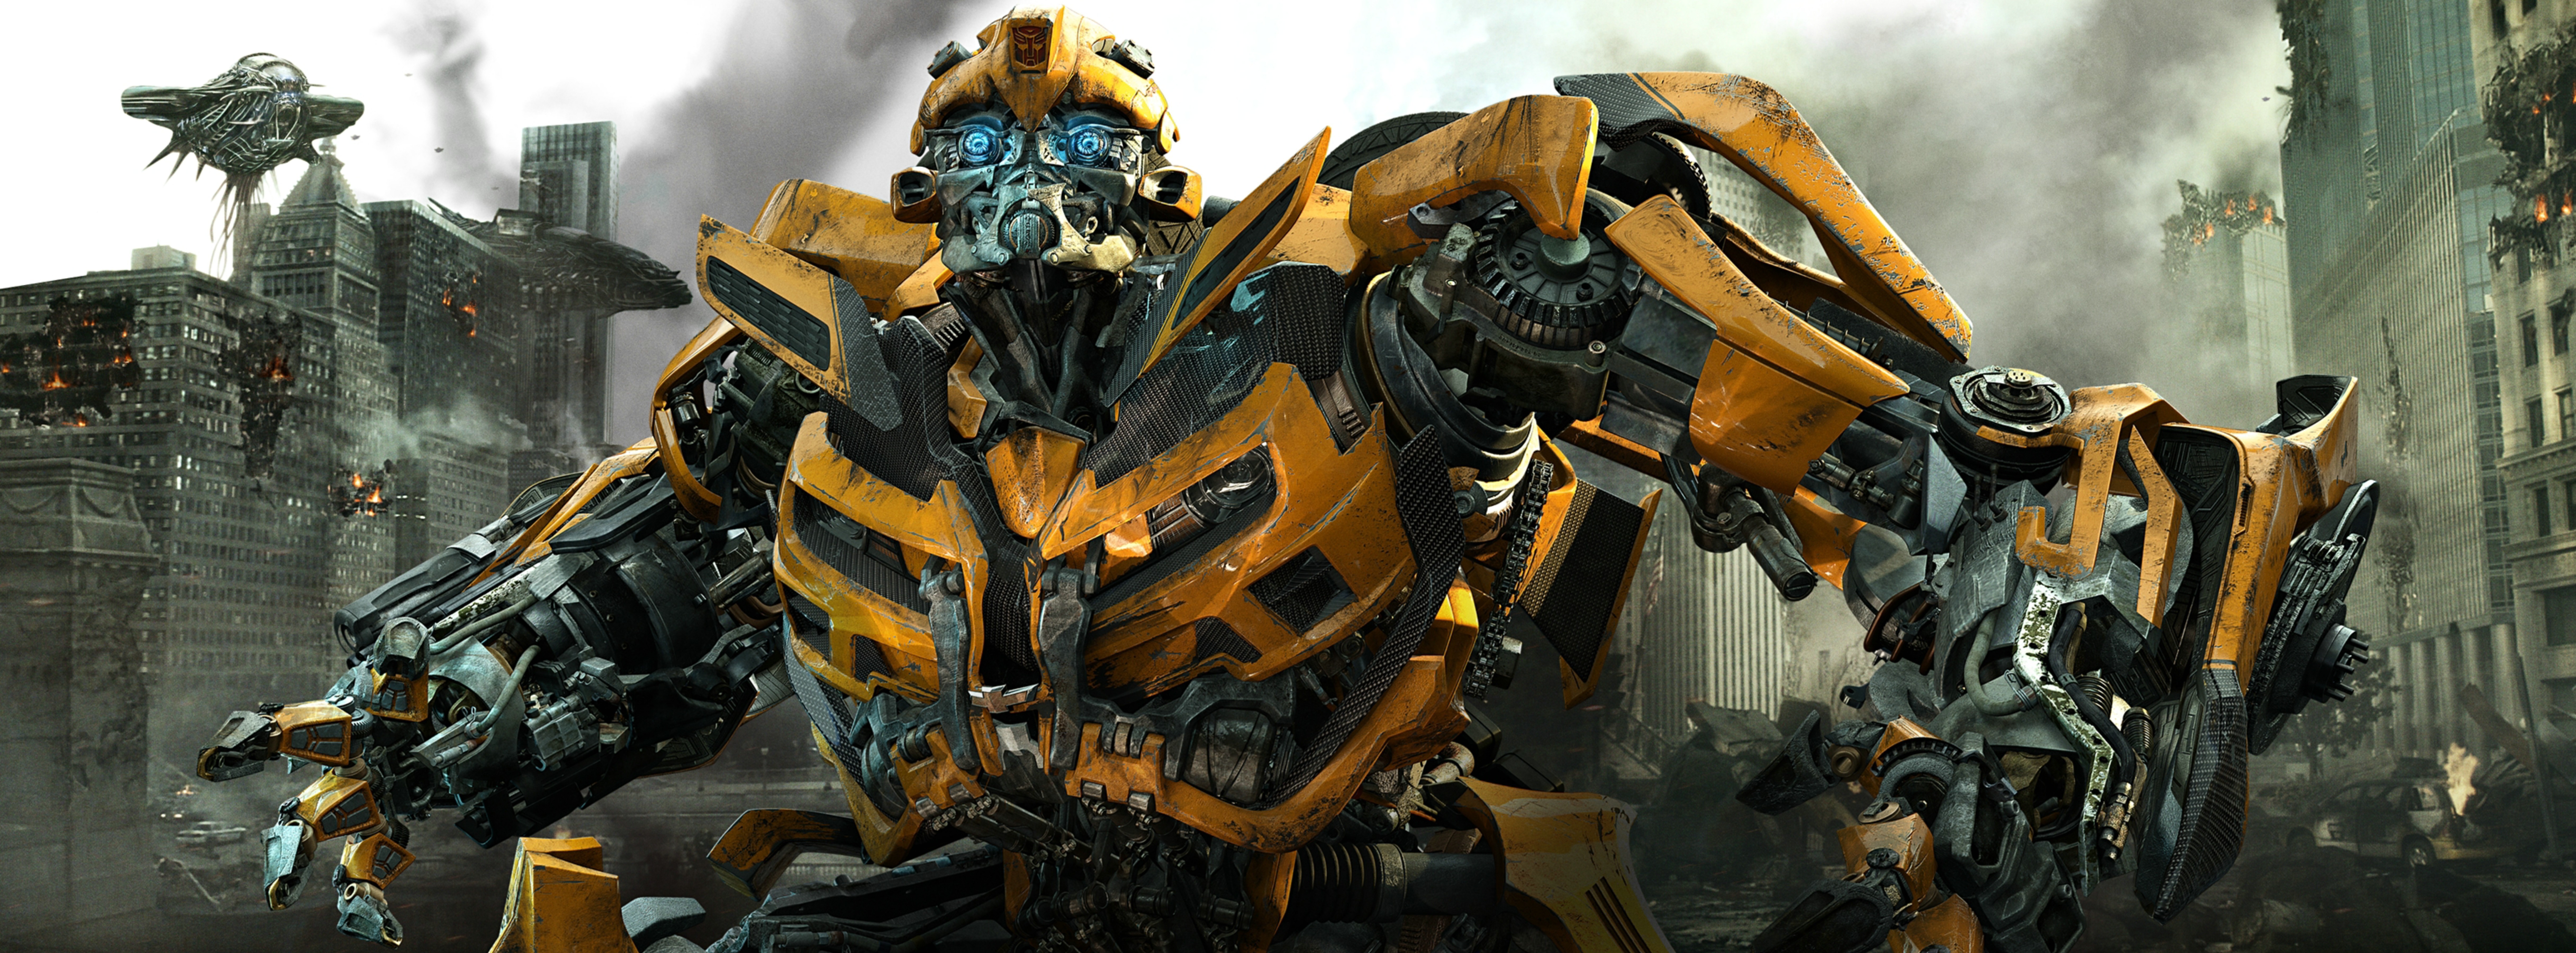 General 9735x3600 Transformers movies robot digital art ultrawide